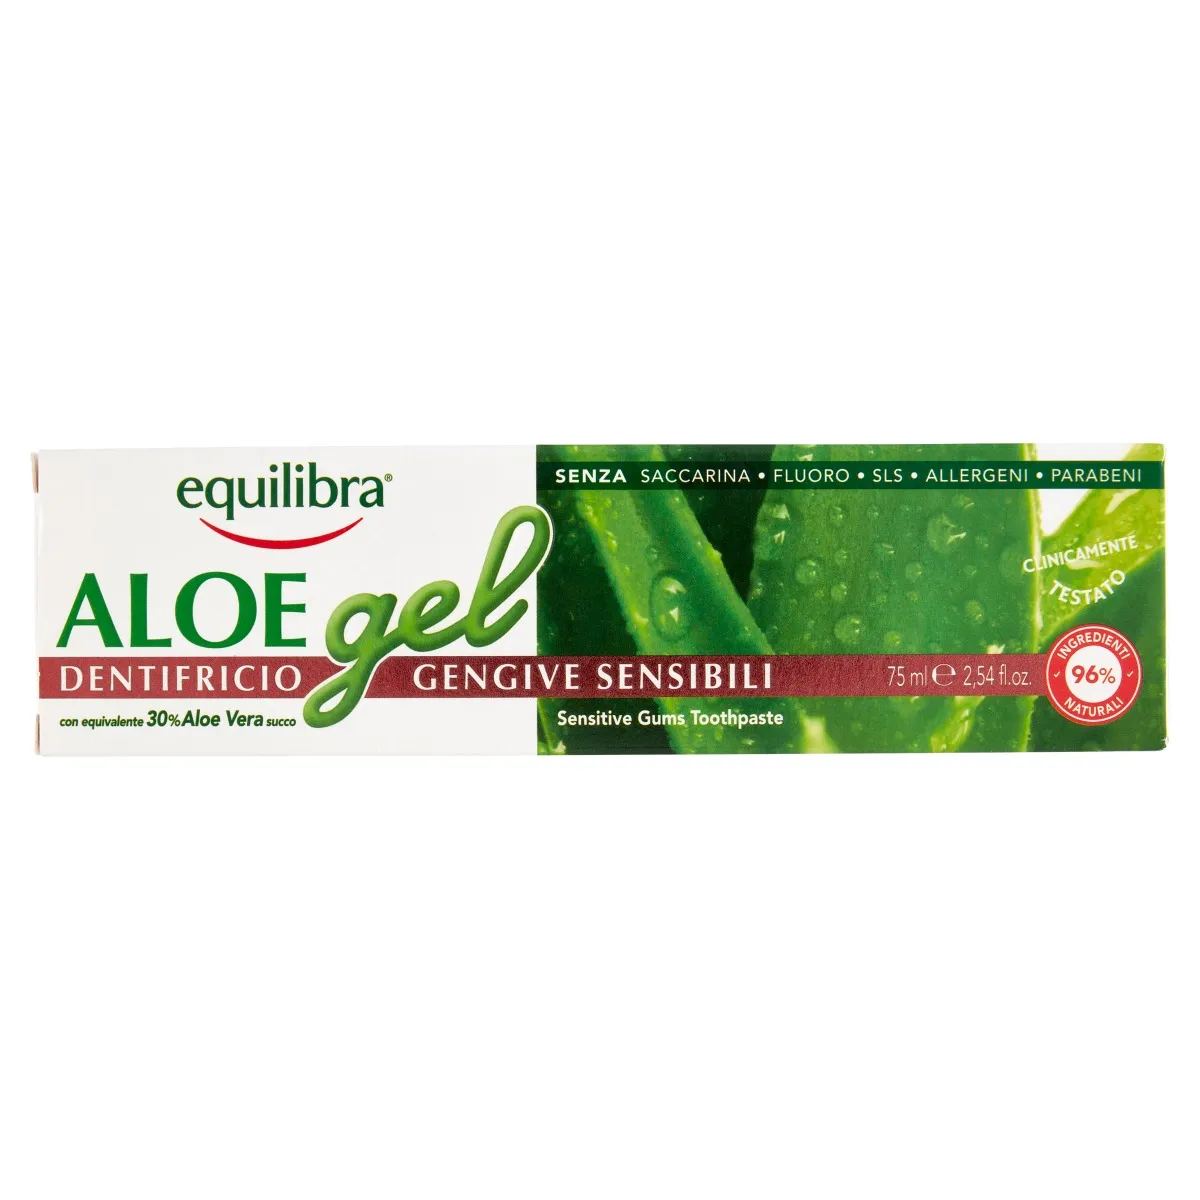 Equilibra Aloe Gel Dentifricio Gengive Sensibili 75 Ml Contro i disturbi gengivali